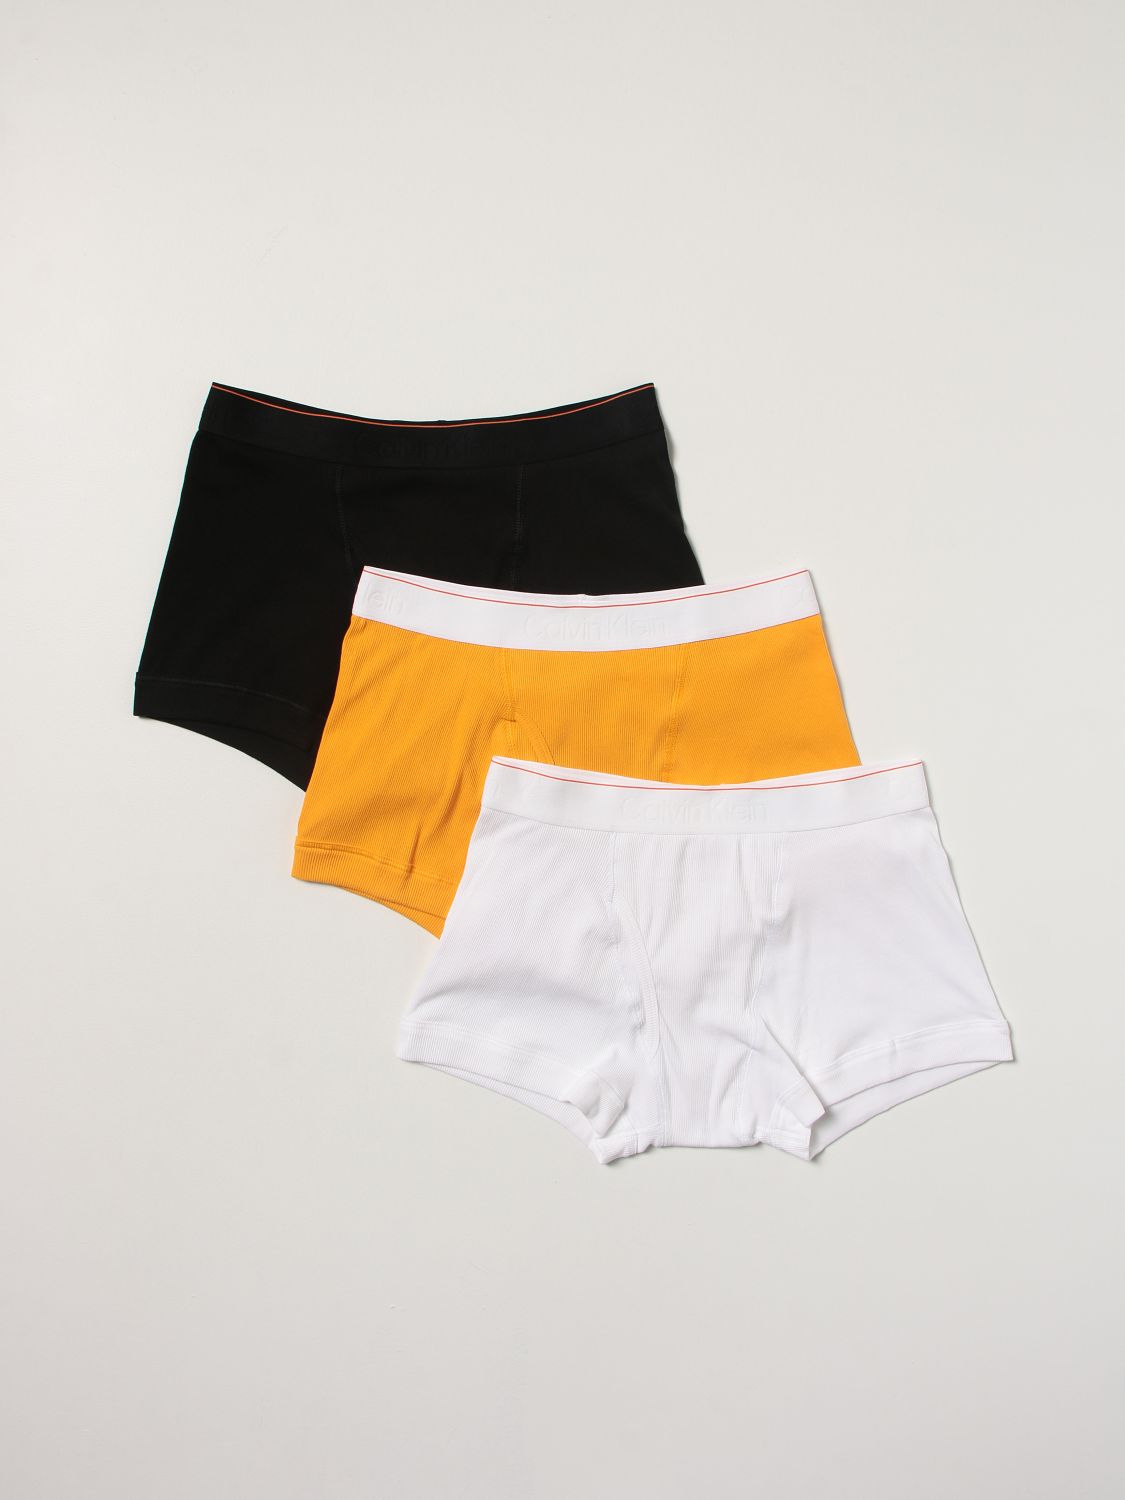 Sous-vêtement Heron Preston For Calvin Klein: Sous-vêtement homme Orange 2.0-heron Preston X Calvin Klein noir 1